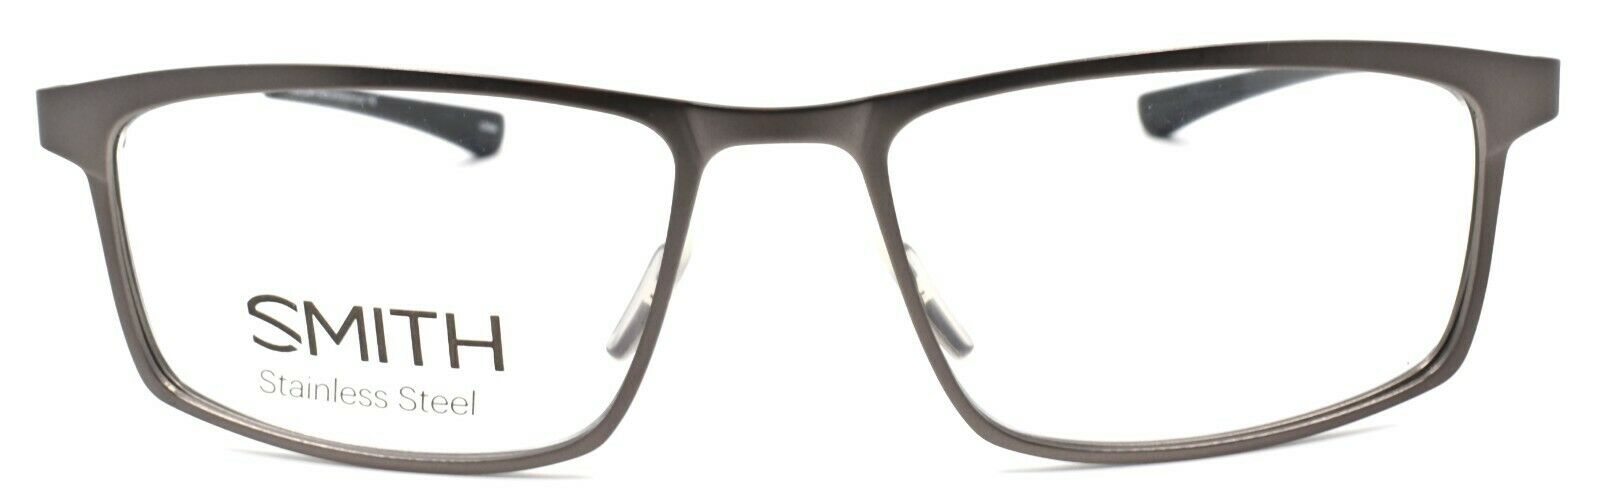 2-SMITH Optics Guild54 FRE Men's Eyeglasses Frames 54-17-140 Matte Dark Ruthenium-762753295644-IKSpecs